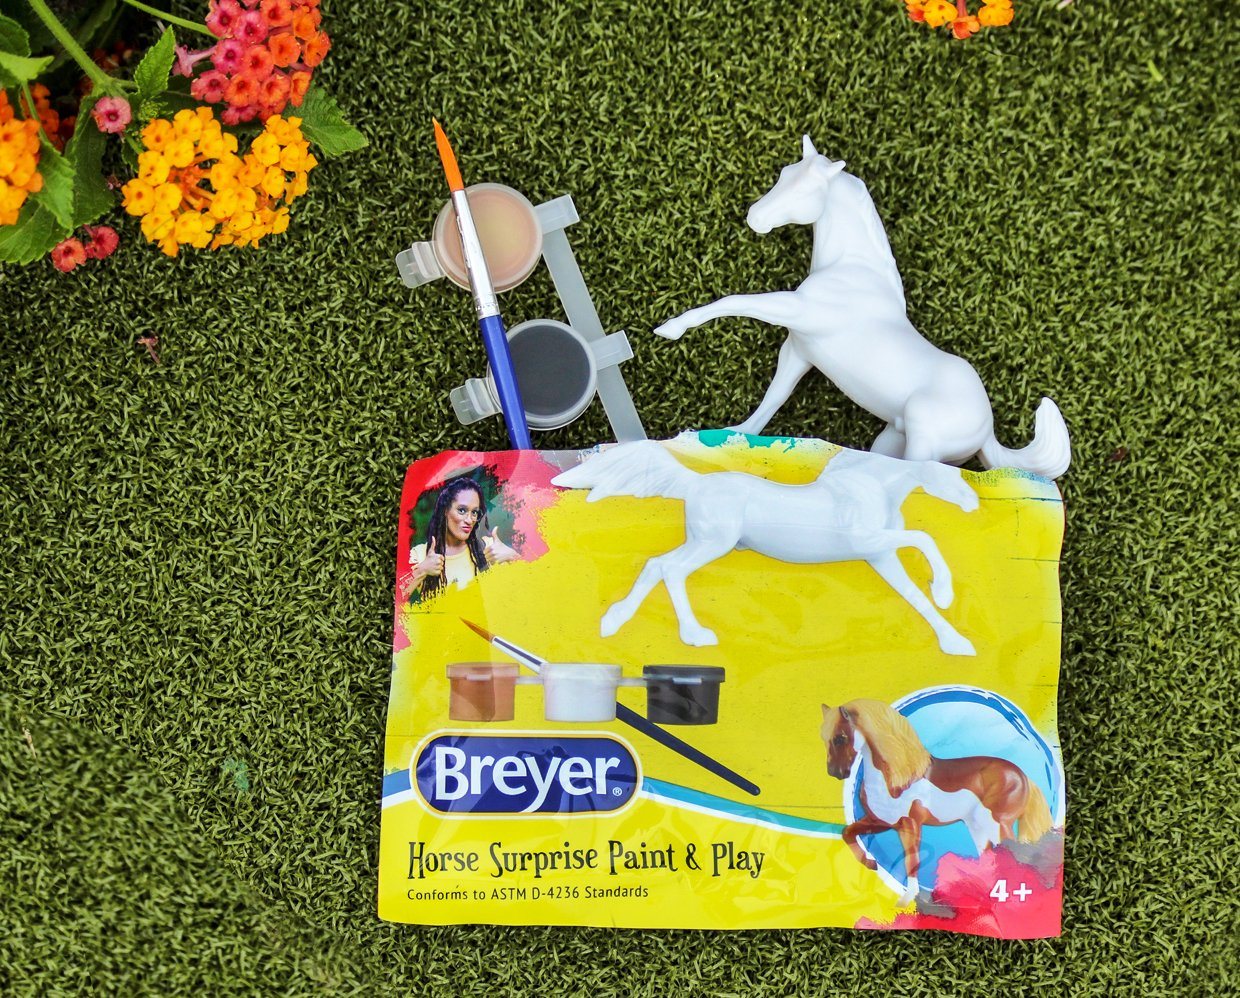 BREYER HORSE SURPRISE PAINT & PLAY